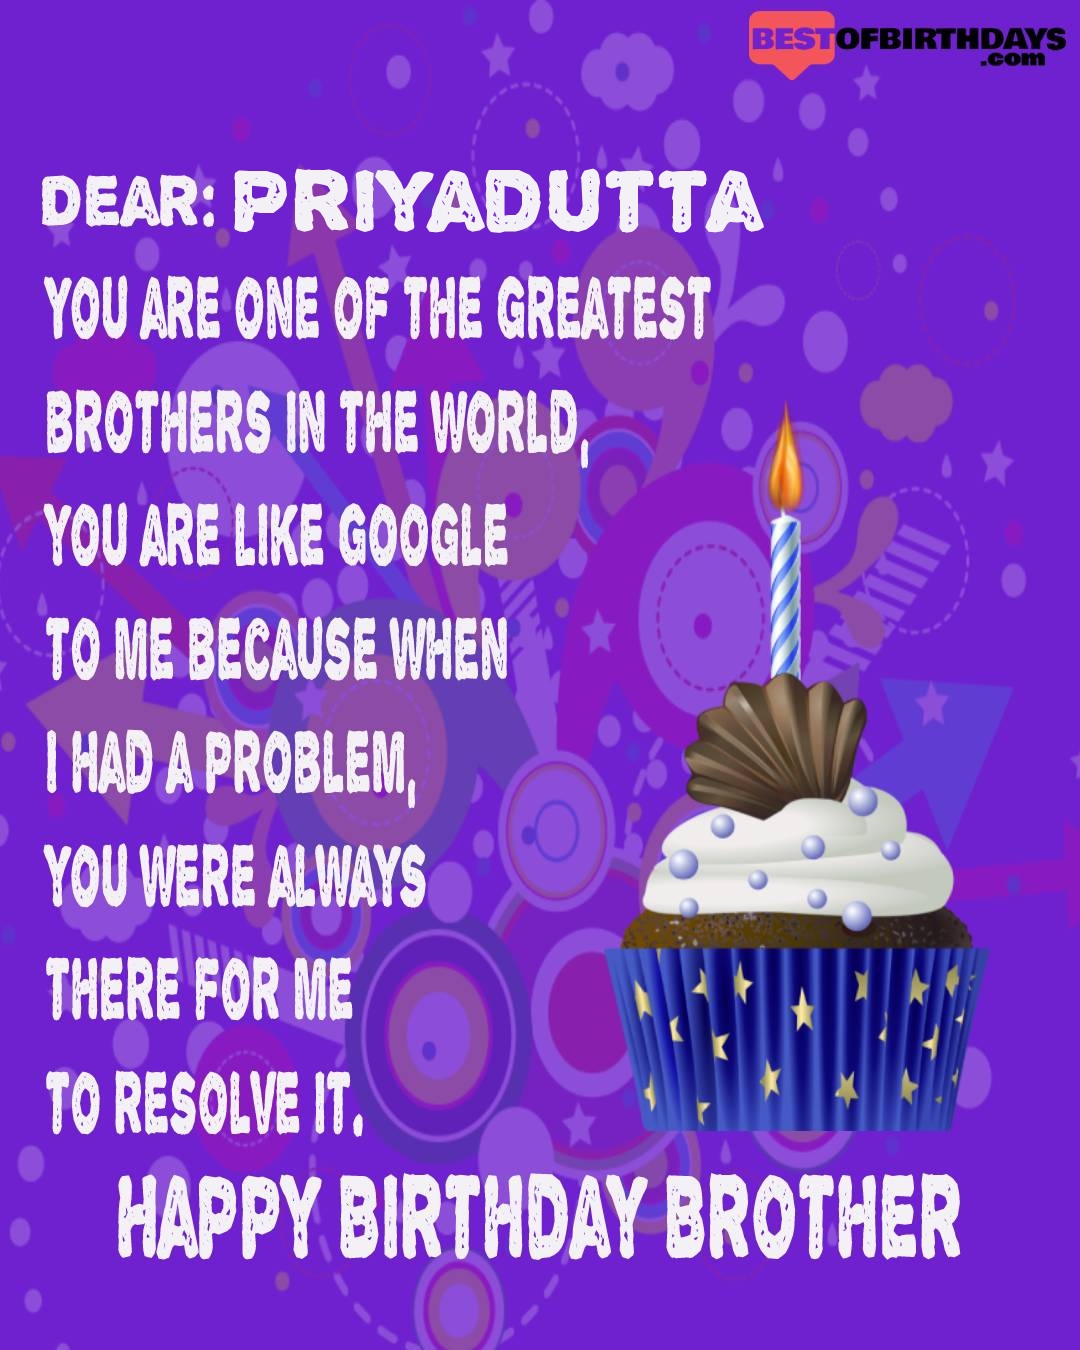 Happy birthday priyadutta bhai brother bro